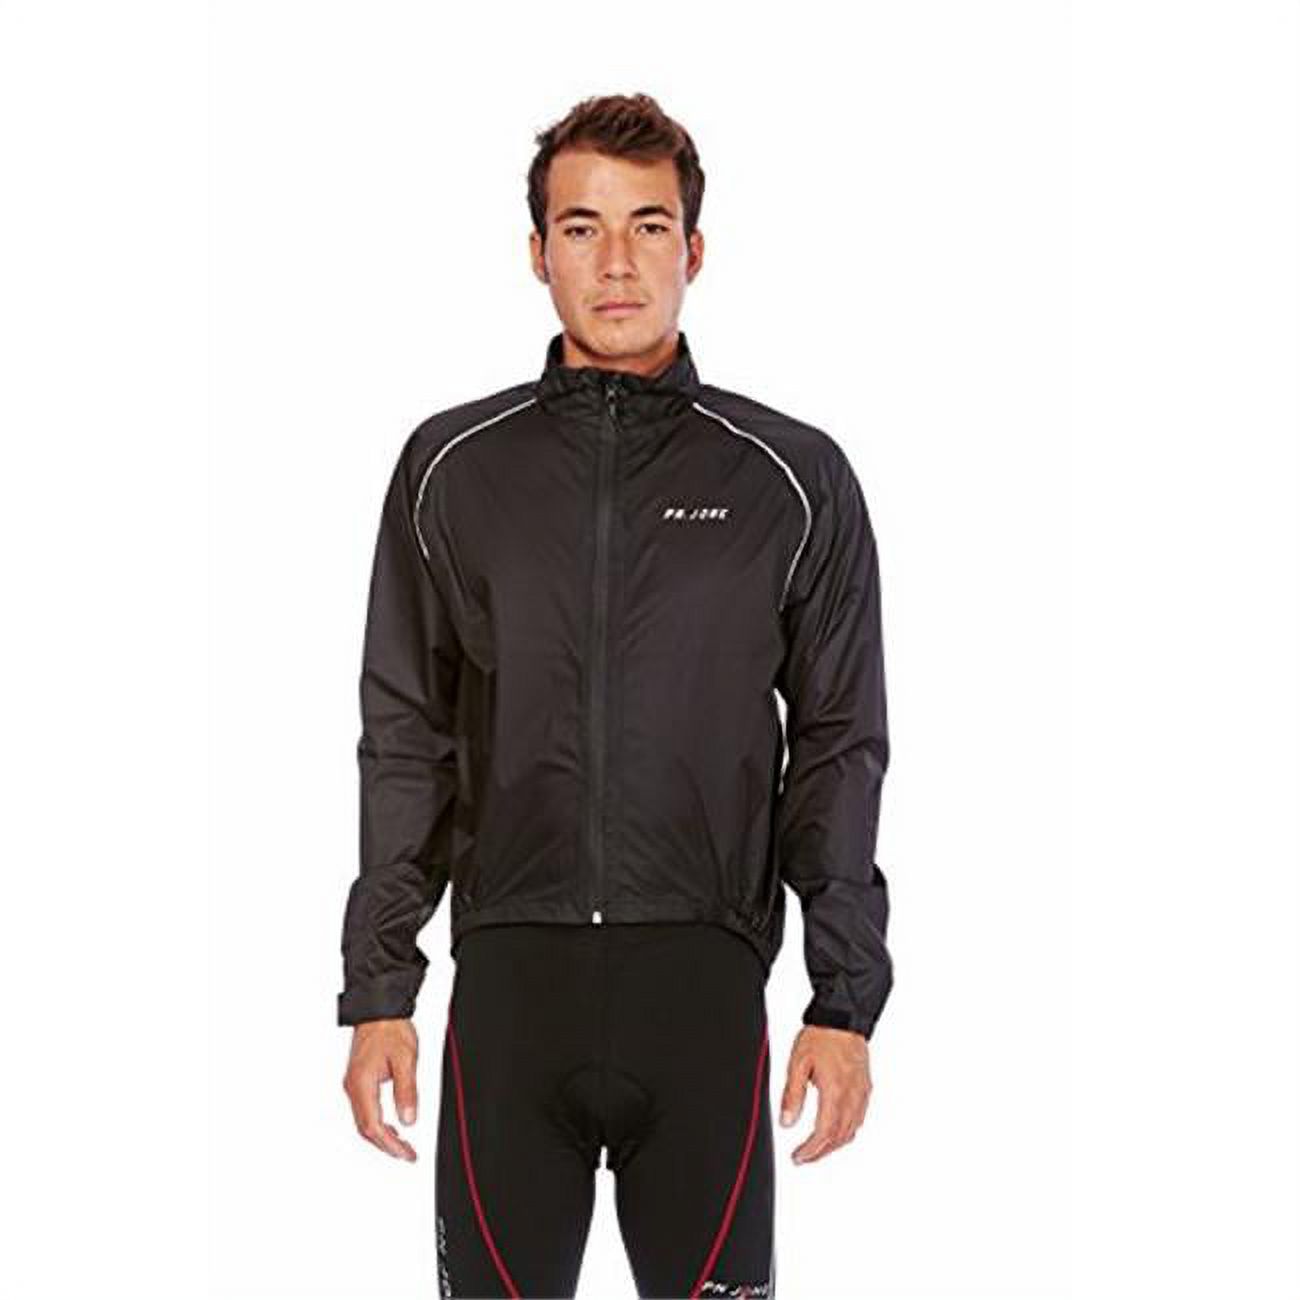 PN Jone Z1-1UM1-EZC6 Mens Full-Zip Lightweight Windproof Jacket, Black - Large - image 1 of 1